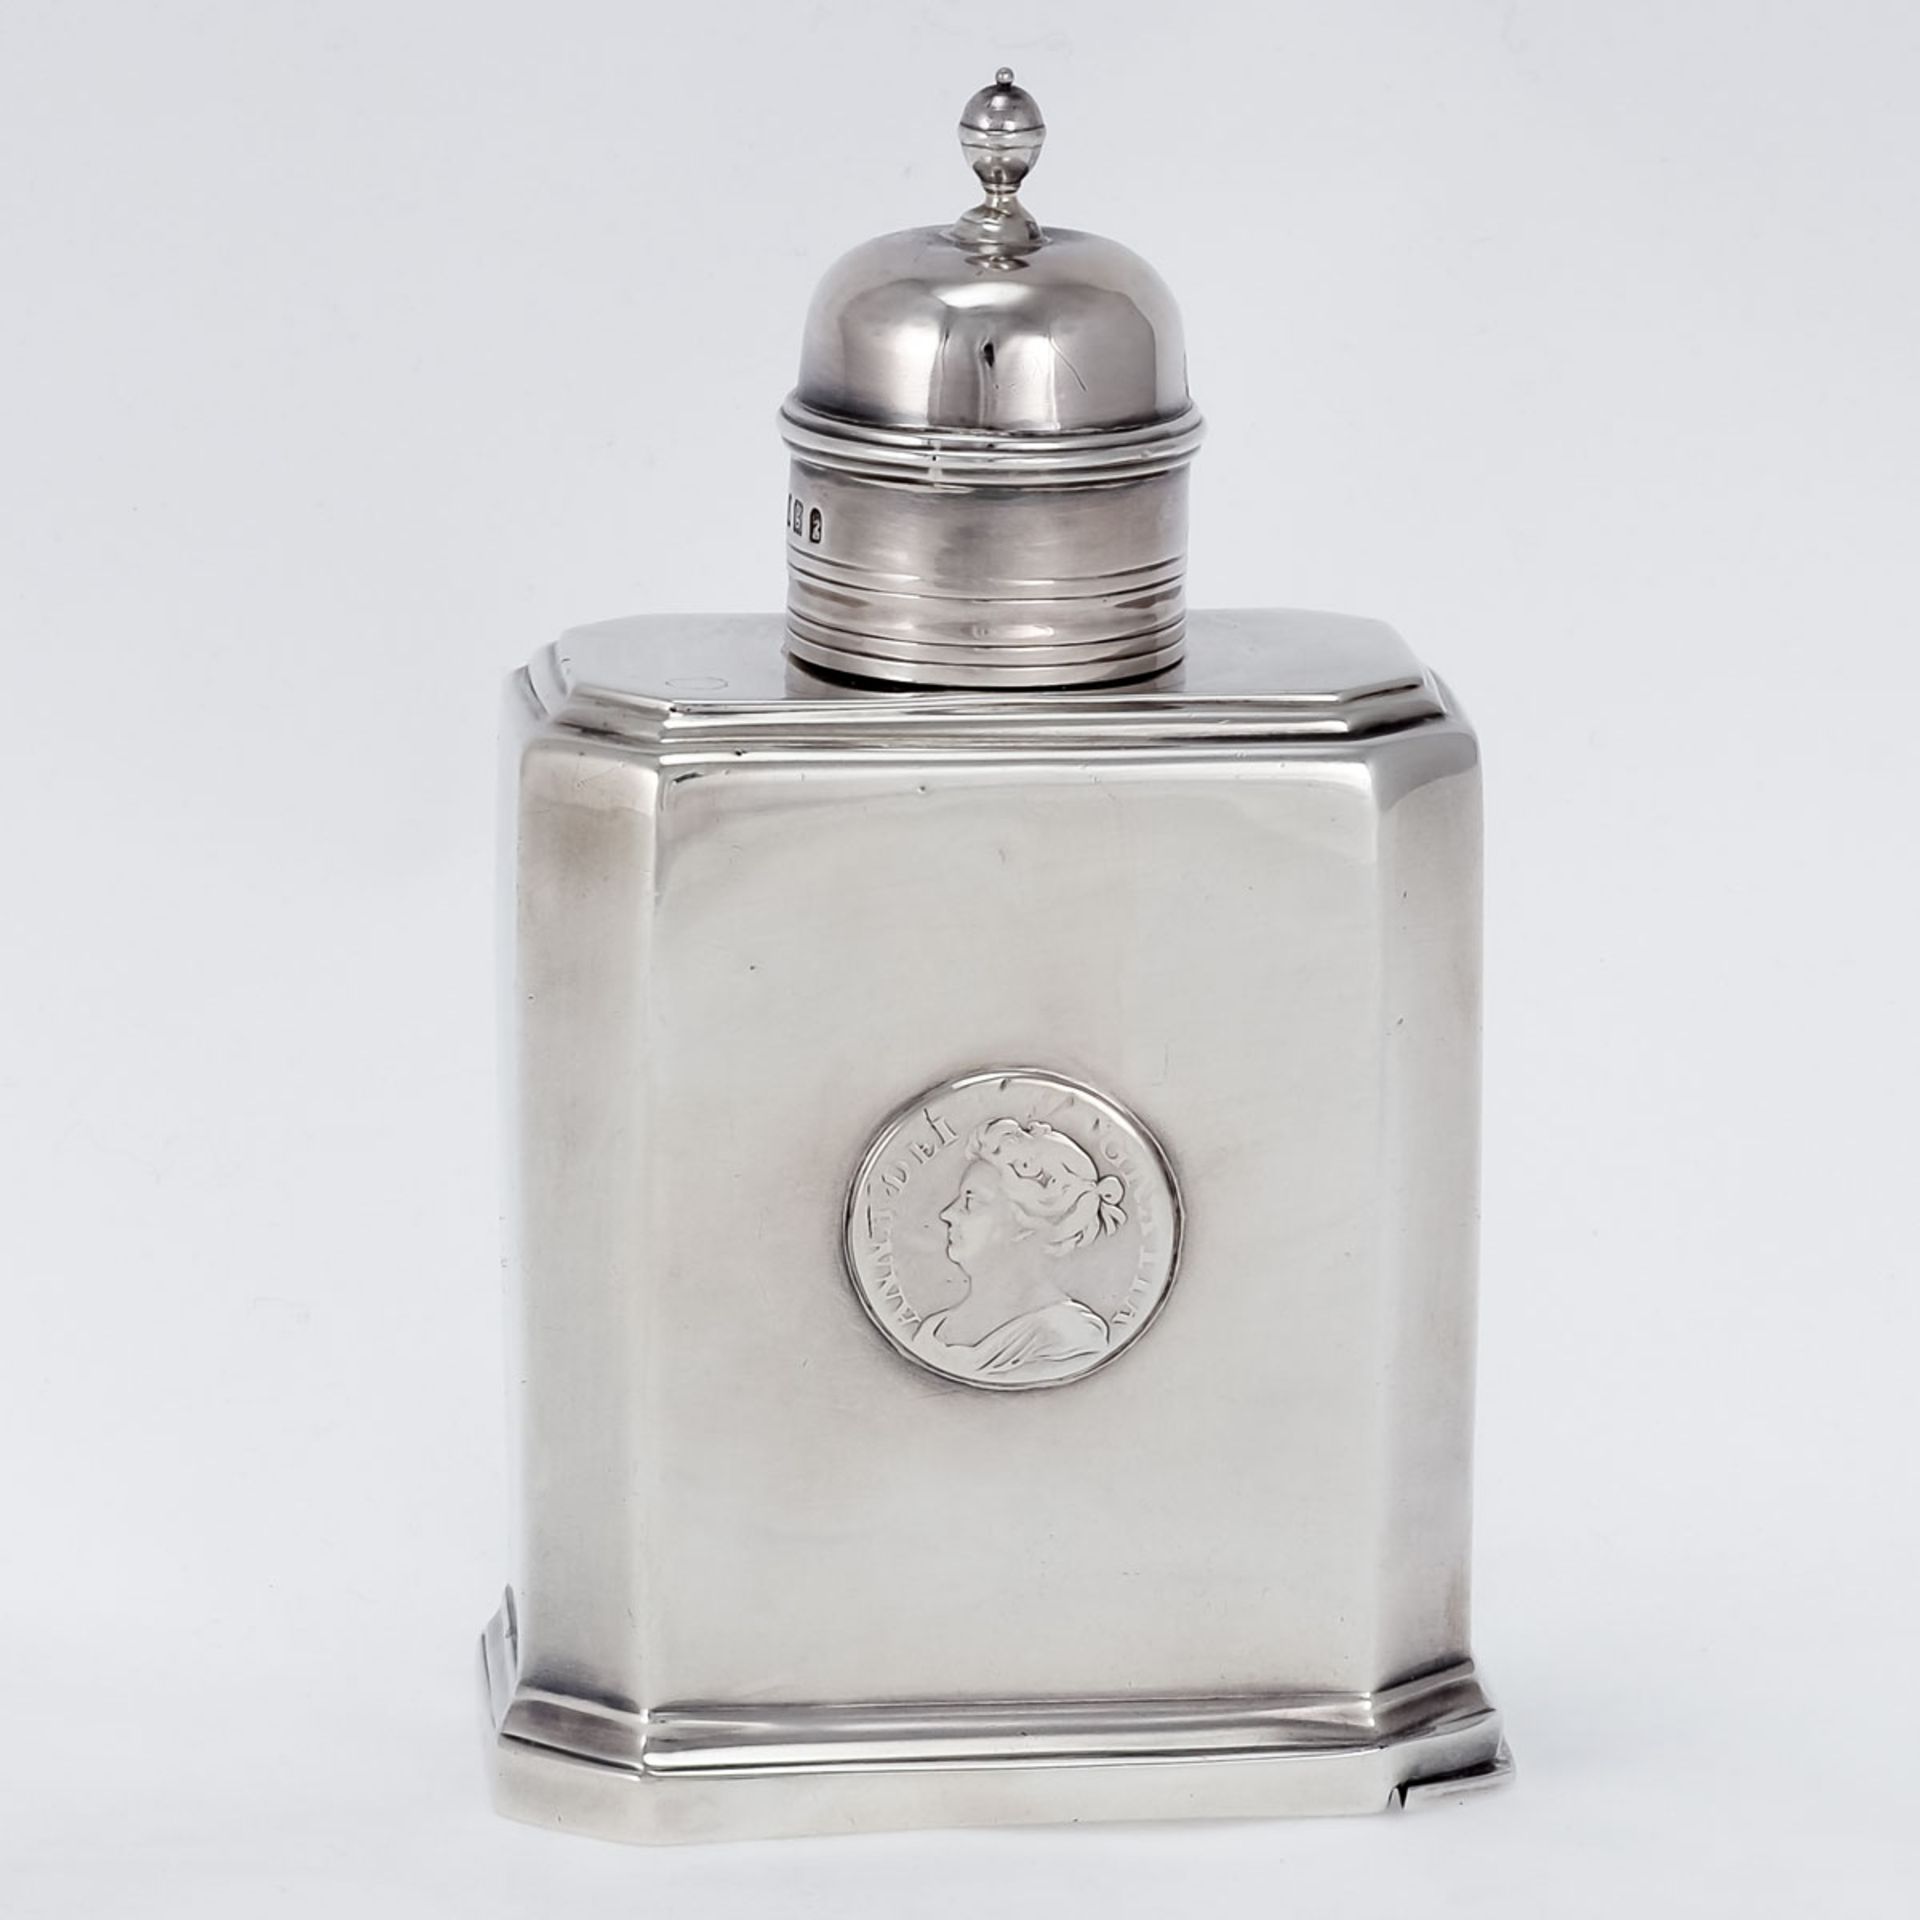 Teedose Thomas Barker/London/England, um 1822/23. 958er Silber. Punzen: Herst.-Marke, Stadt-